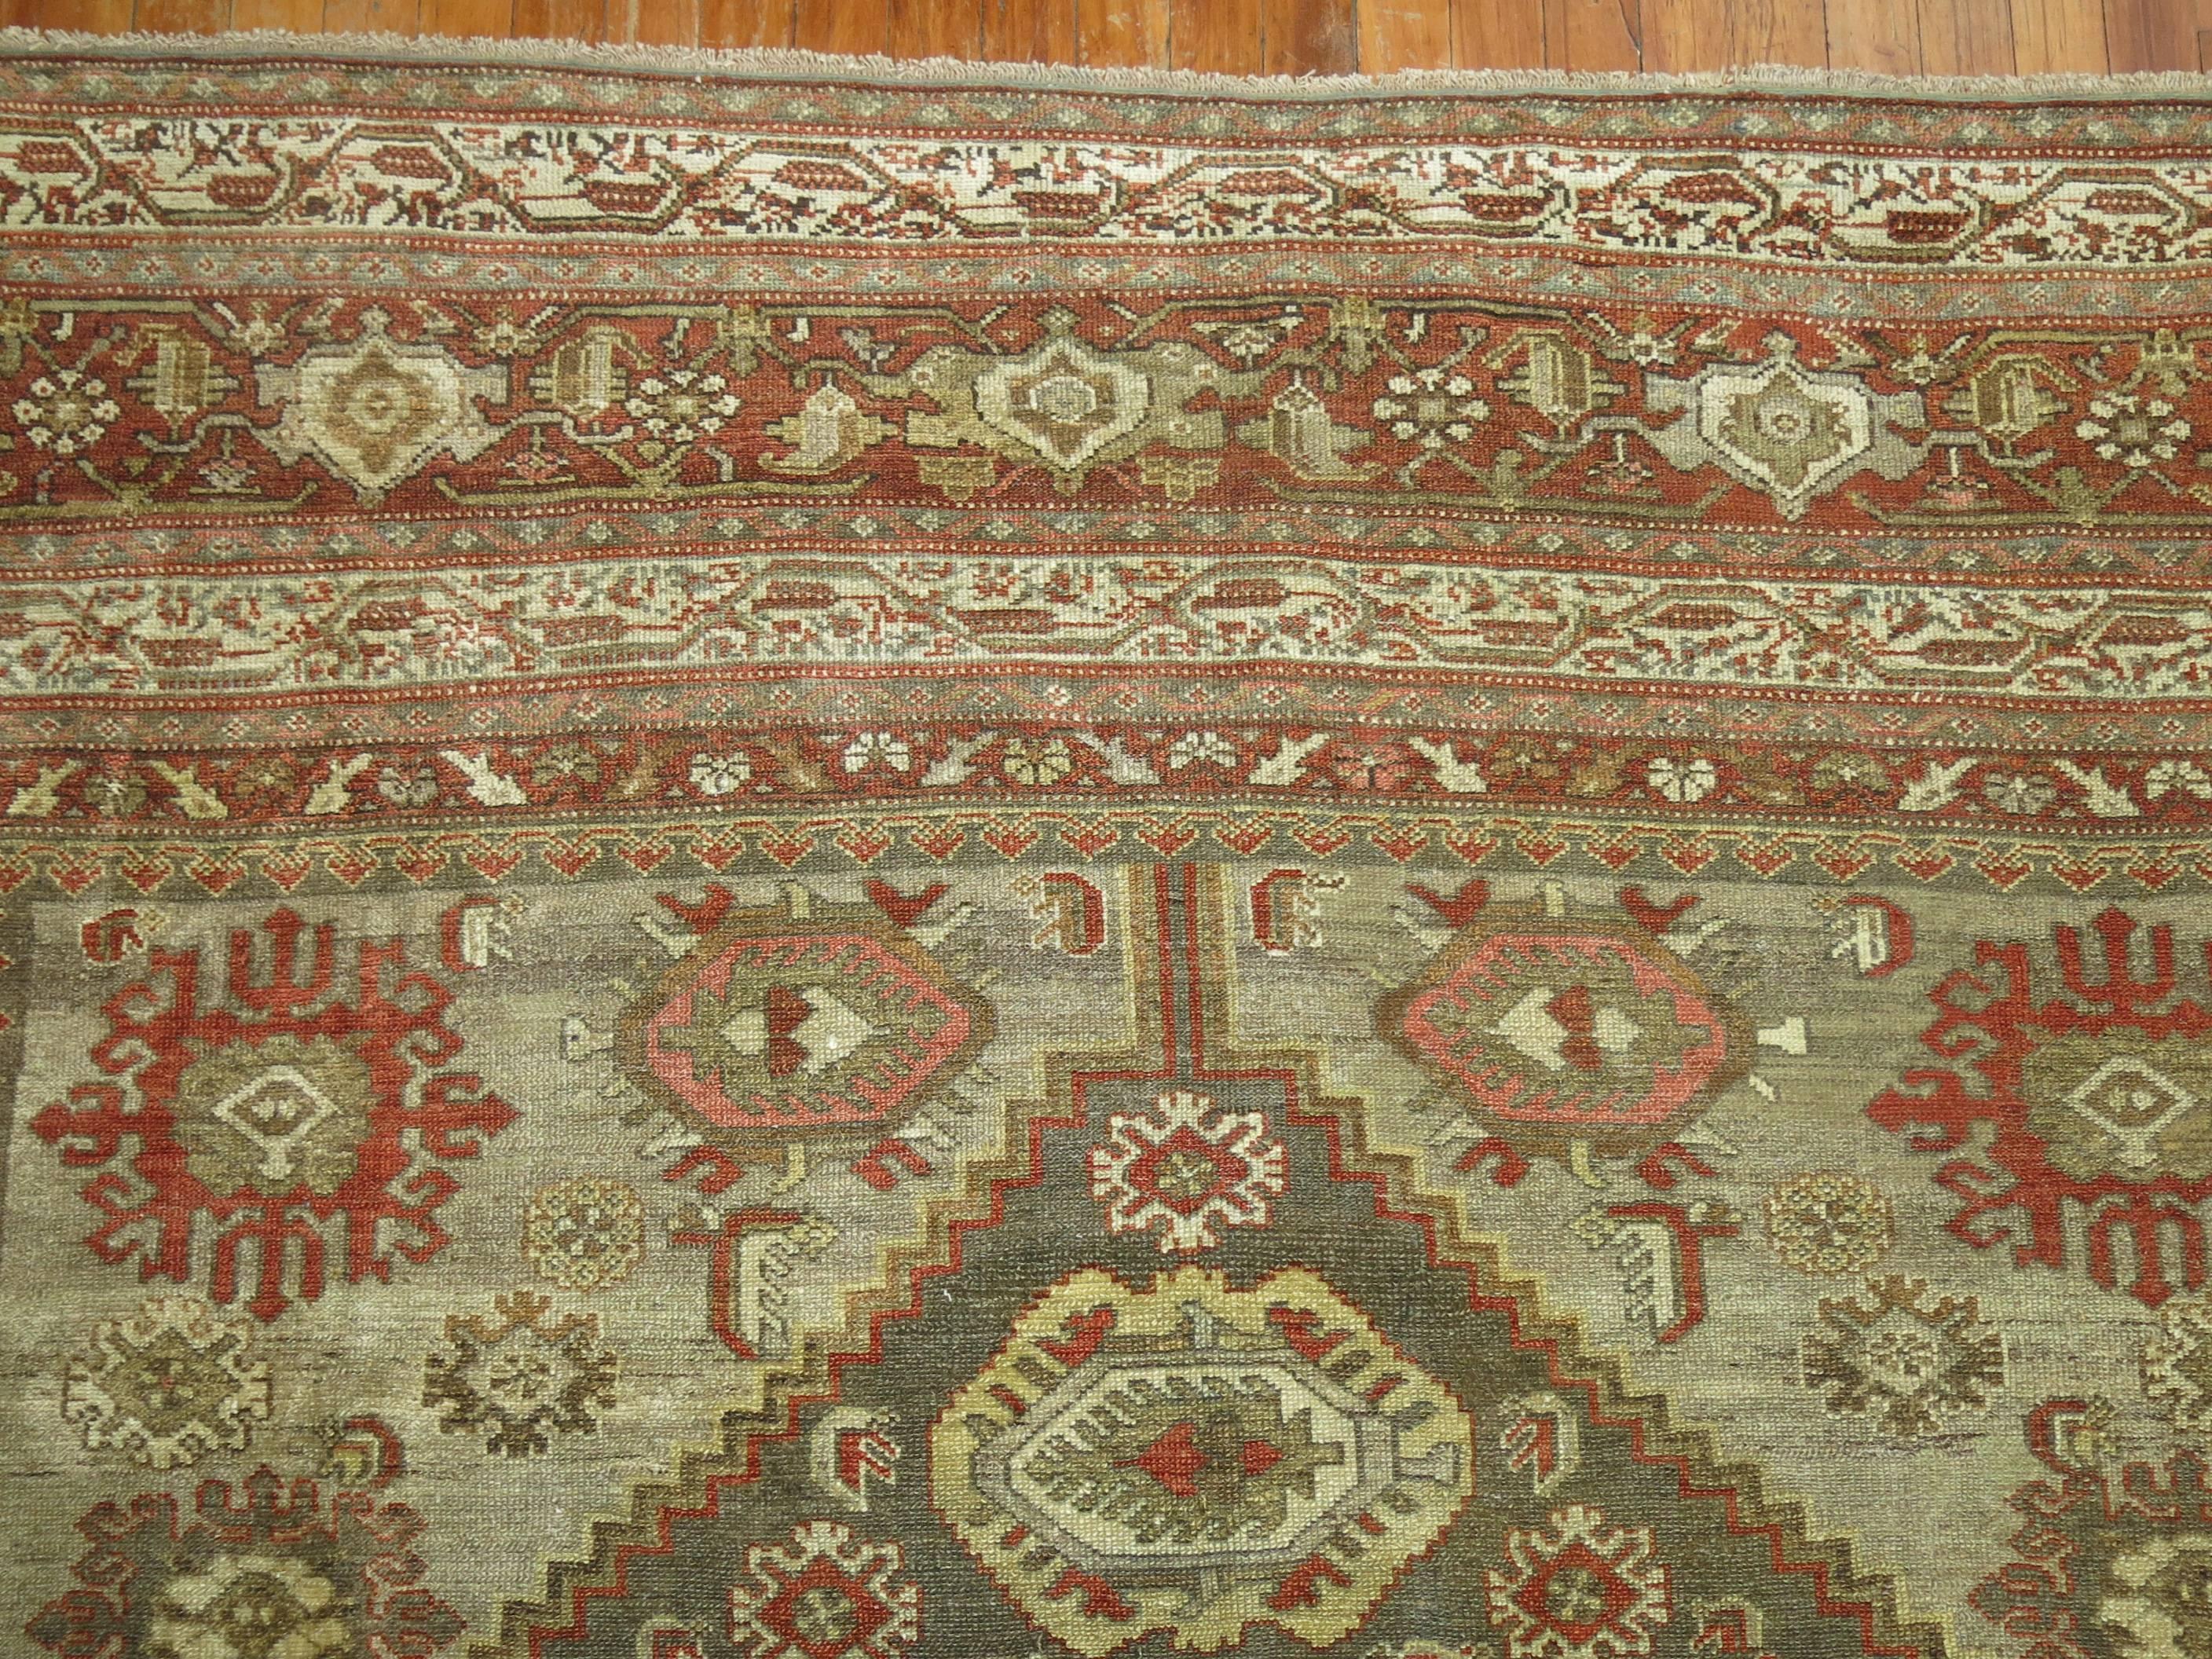 Wool Antique Persian Malayer Decorative Carpet in  Predominant Silver Color